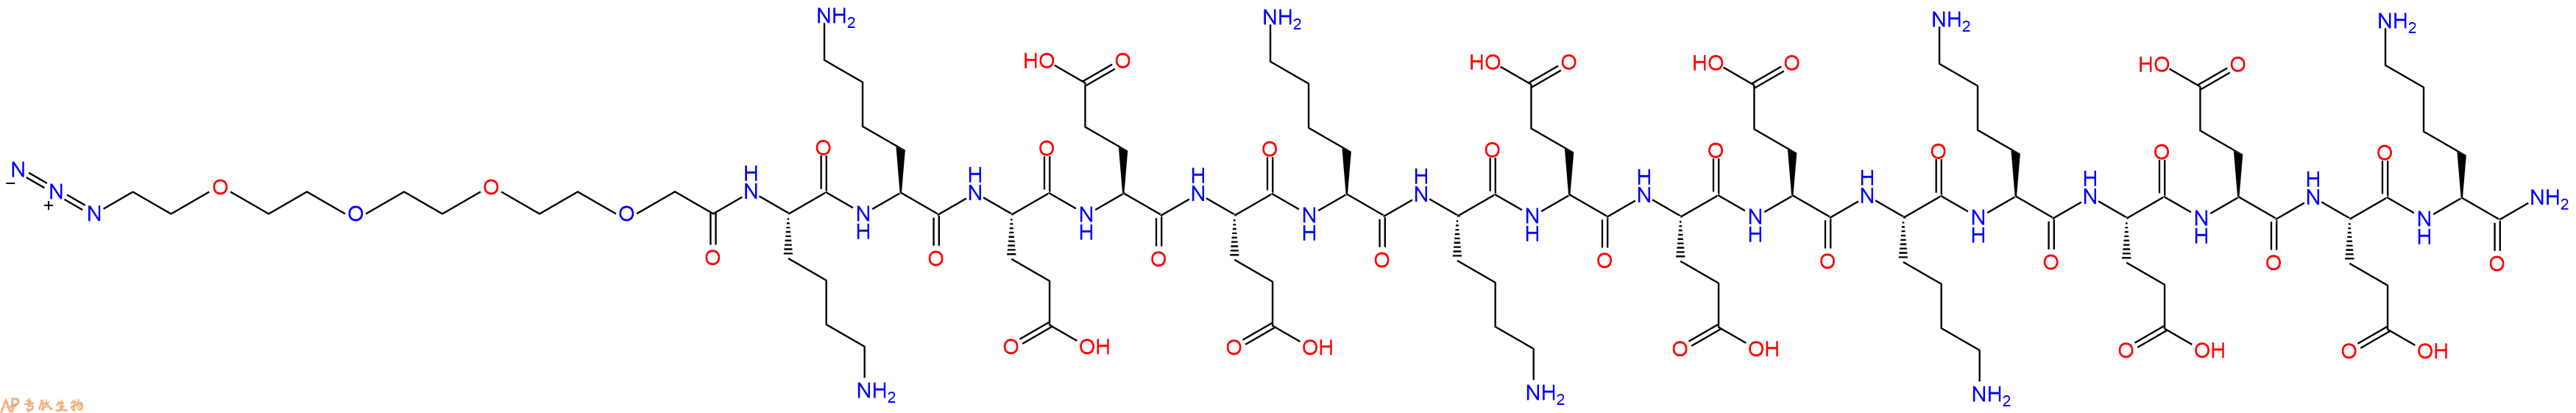 专肽生物产品十七肽N3-PEG4-KKEEEKKEEEKKEEEK-NH2